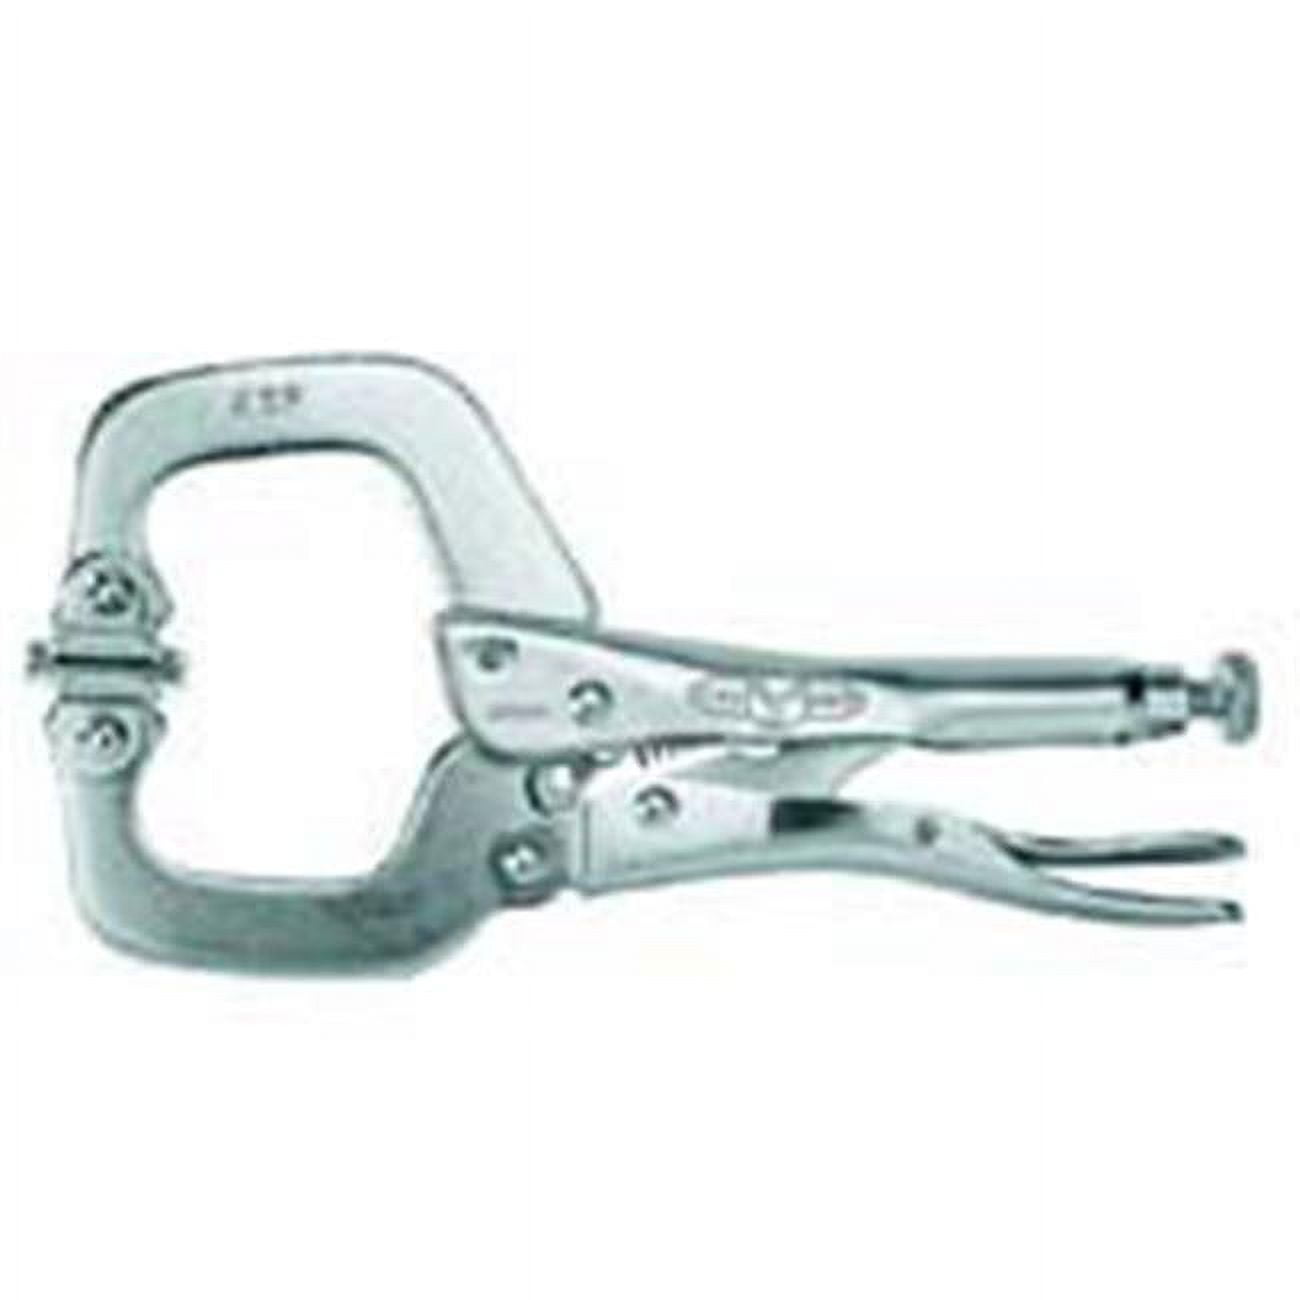 Craftsman 2 pc. Drop Forged Steel Straight Jaw Locking Pliers Set